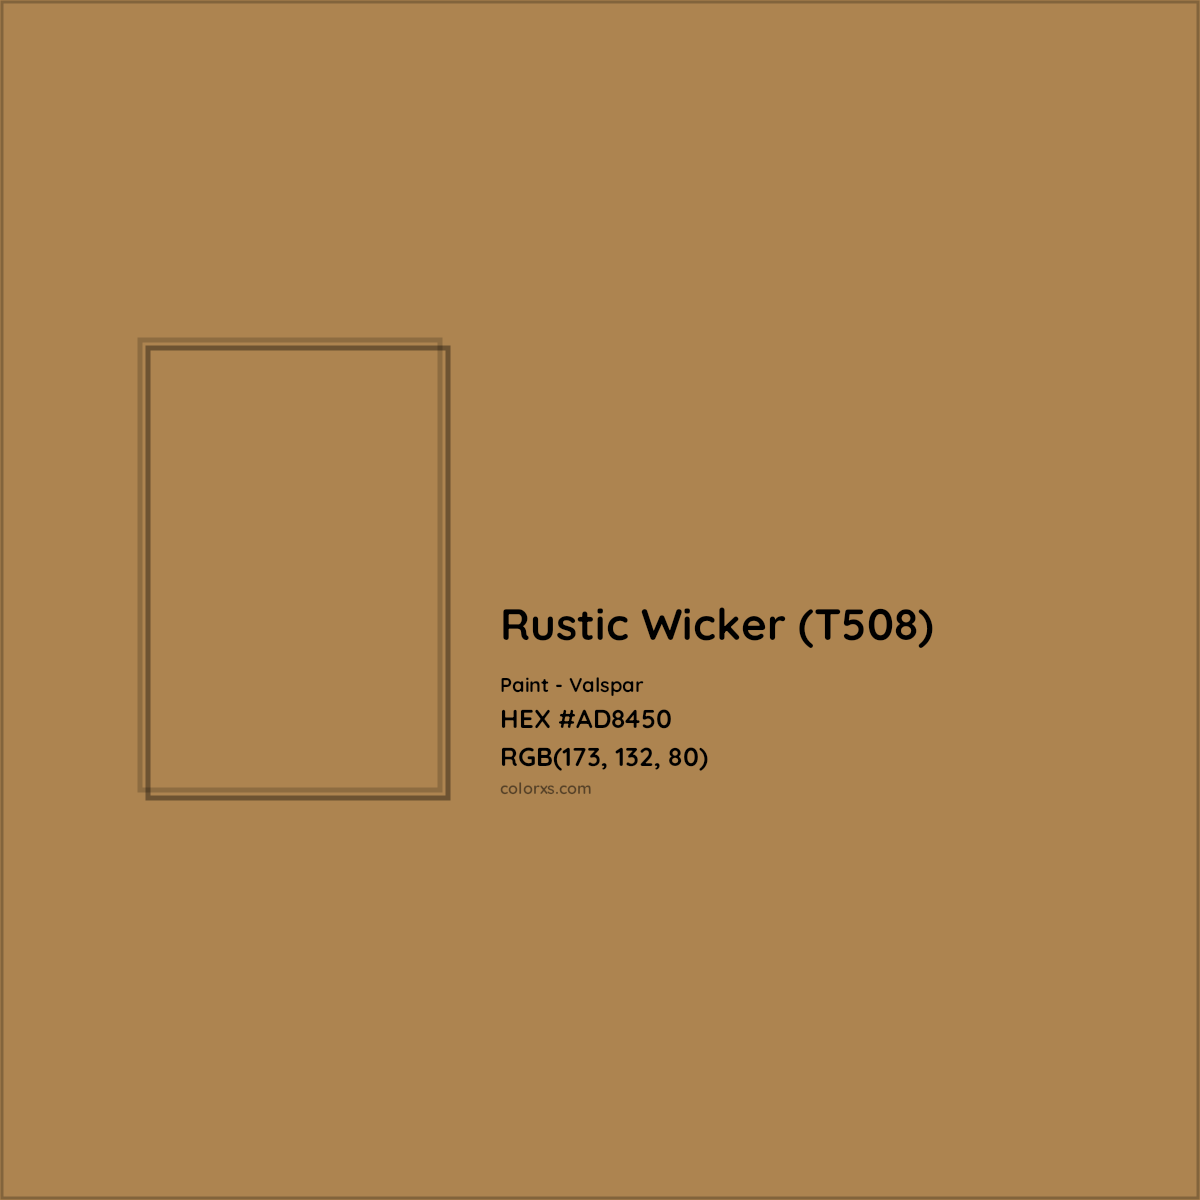 HEX #AD8450 Rustic Wicker (T508) Paint Valspar - Color Code